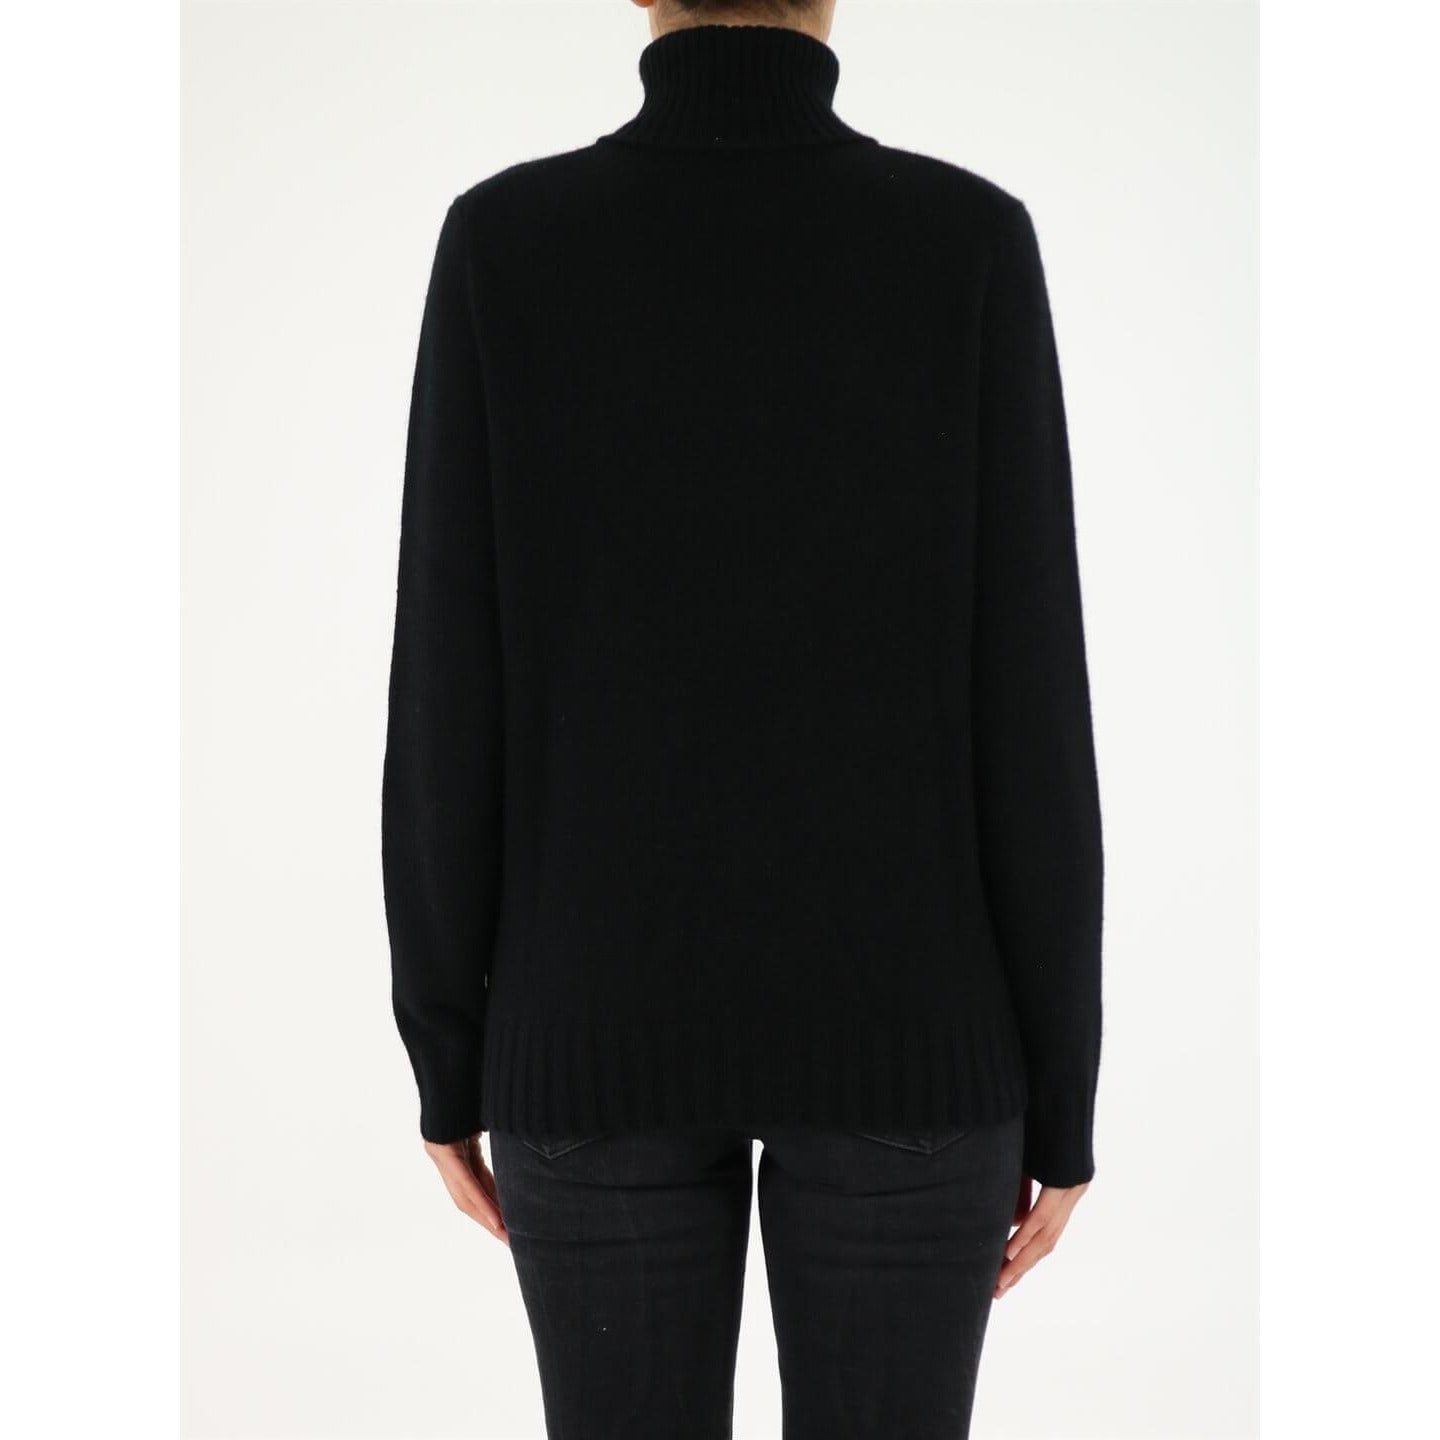 ALLUDE Allude Black Roll-Neck Cashmere Sweater WOMAN KNITWEAR allude-black-roll-neck-cashmere-sweater MjkyMjkz.jpg